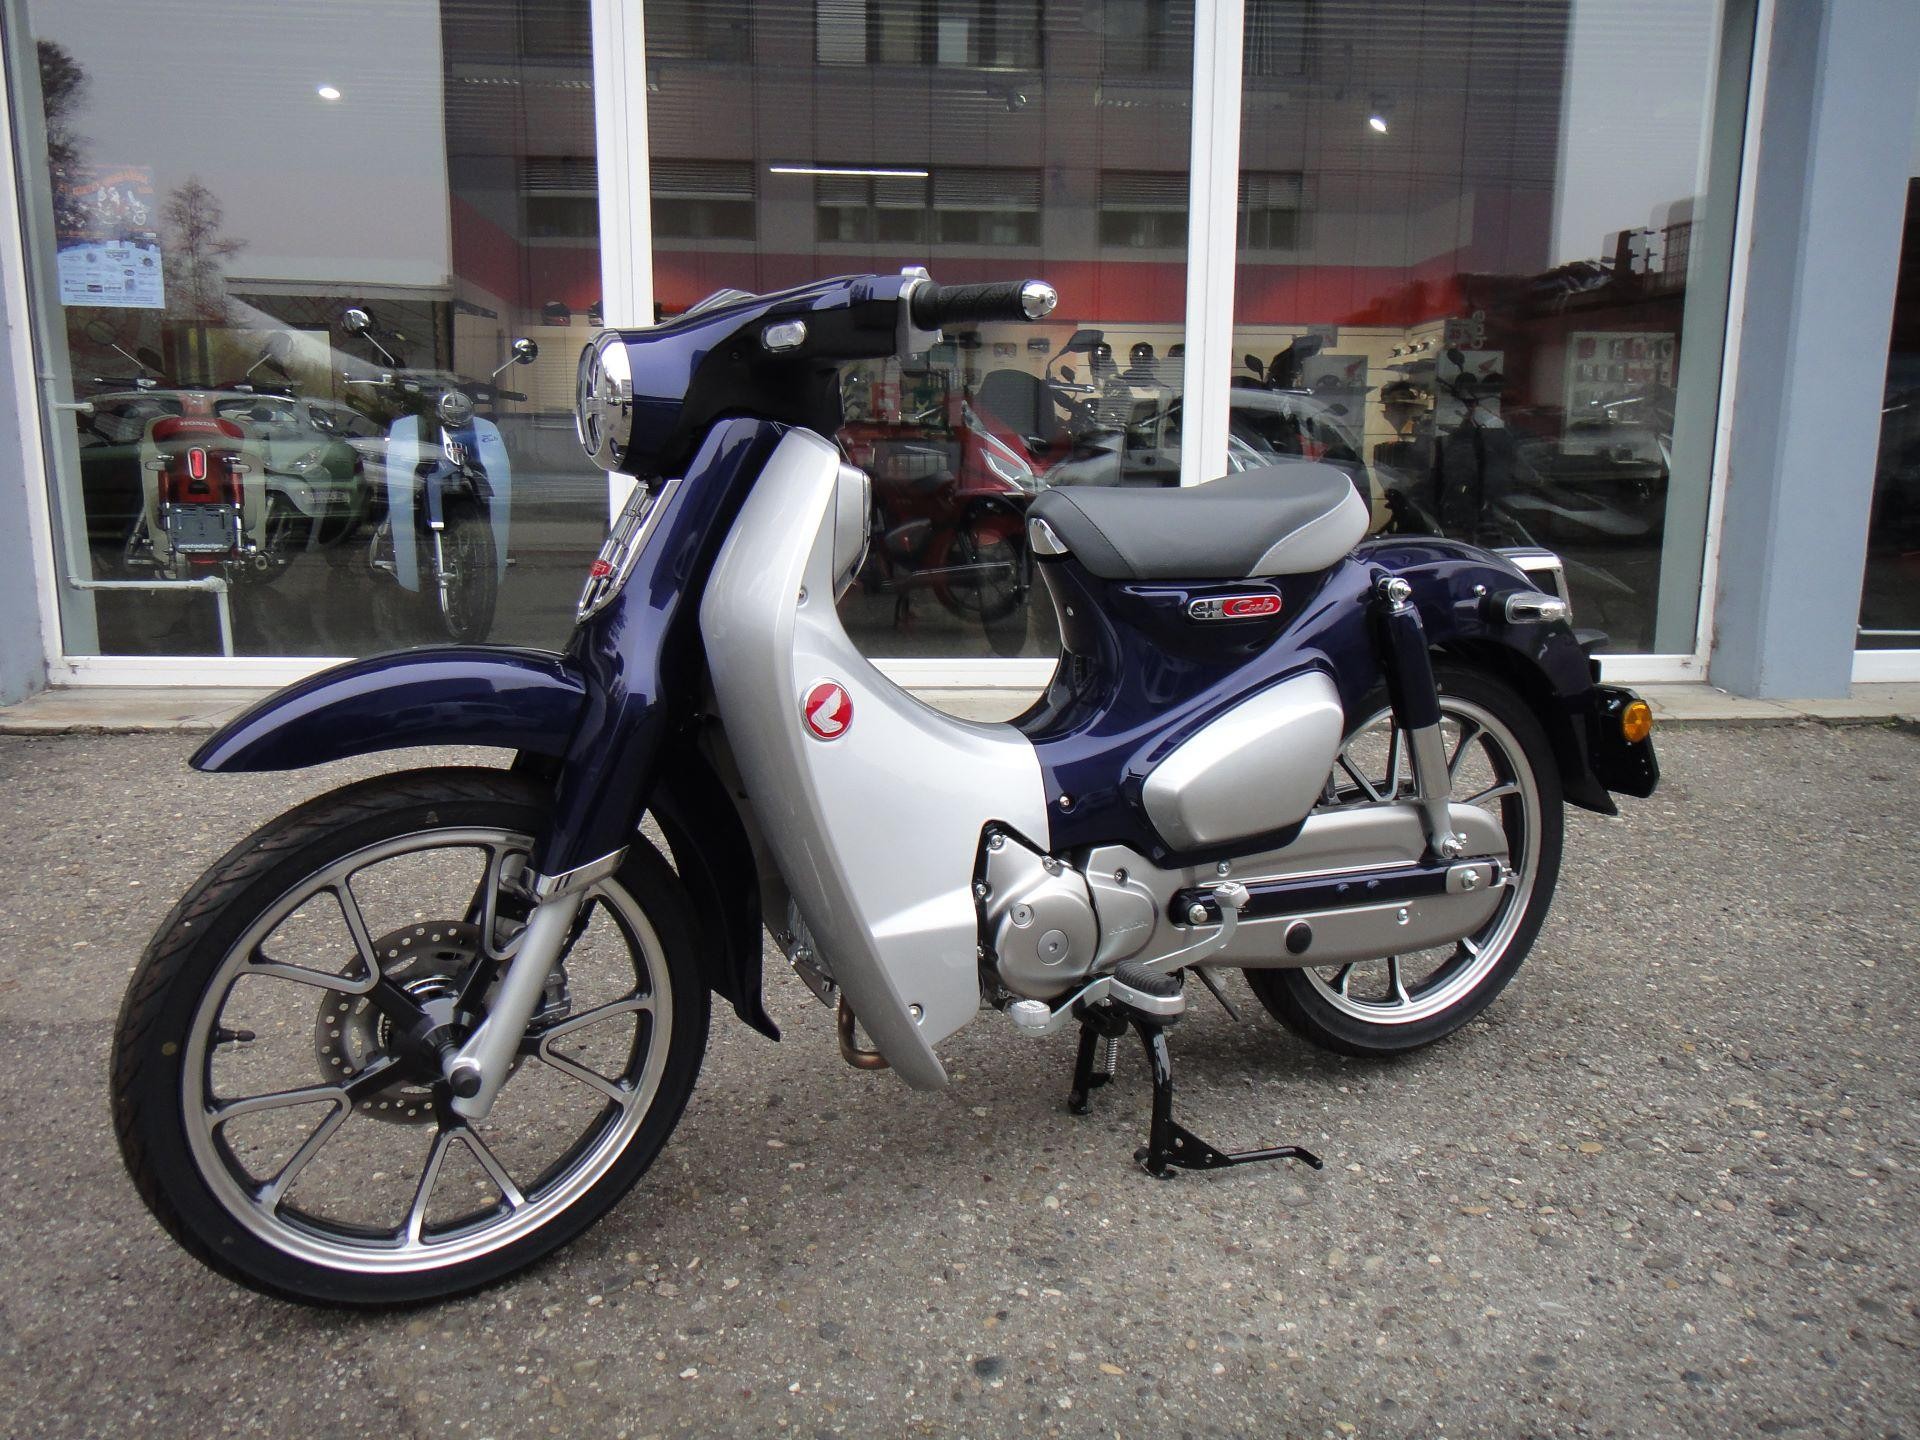 Motorrad Neufahrzeug kaufen HONDA C 125 A Super Cub Speziallackierung ...